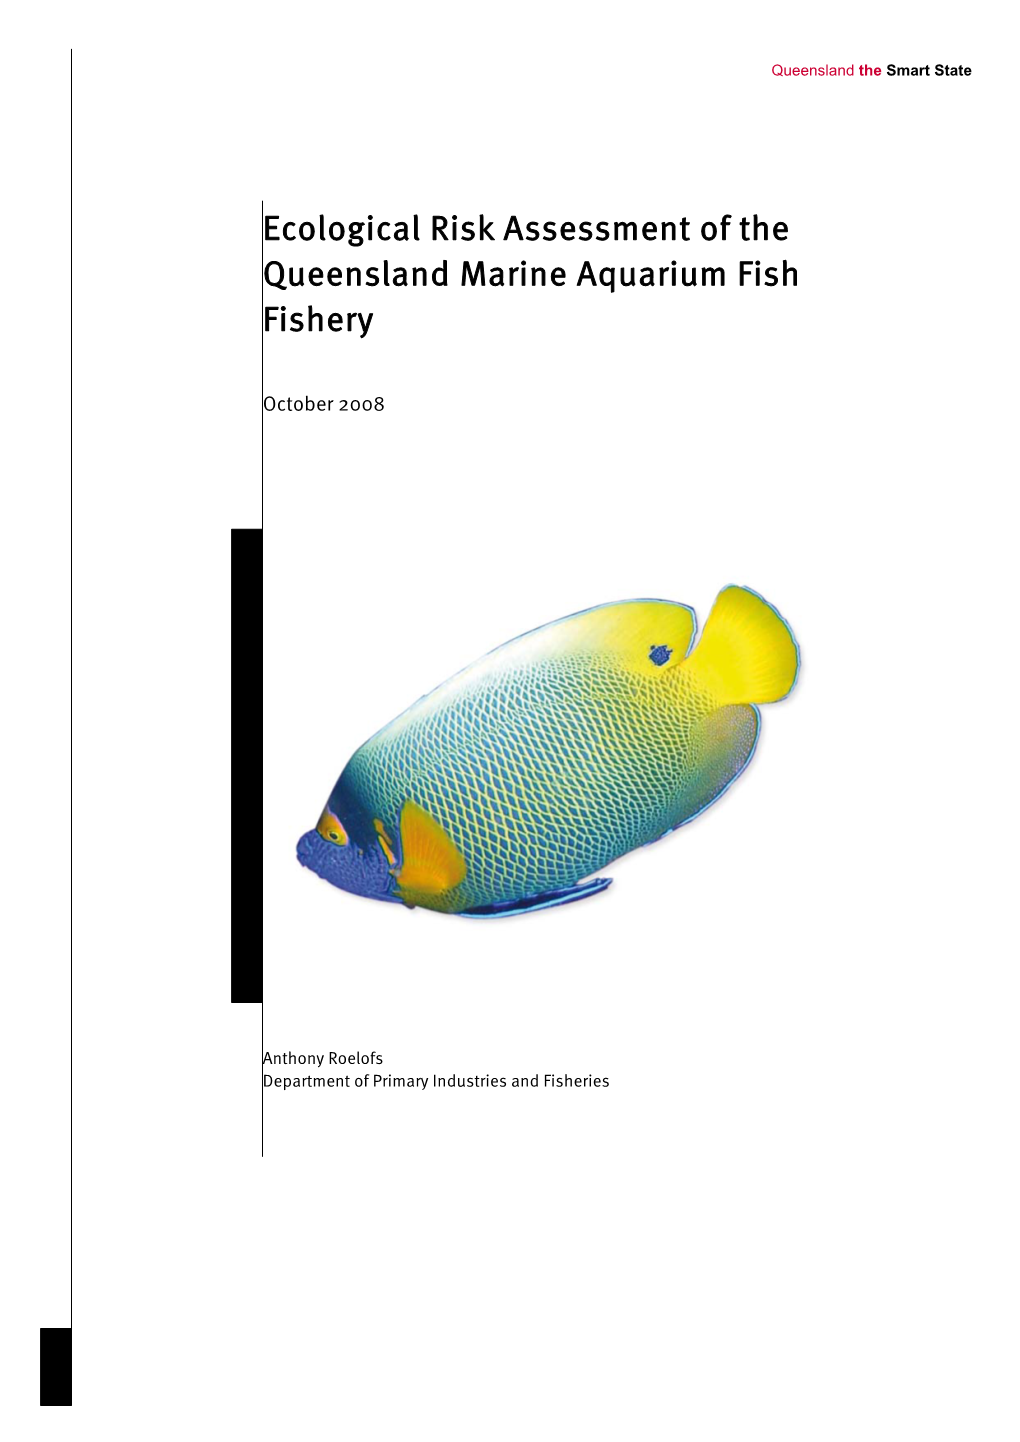 Ecological Risk Assessment of the Queensland Marine Aquarium Fish Fishery